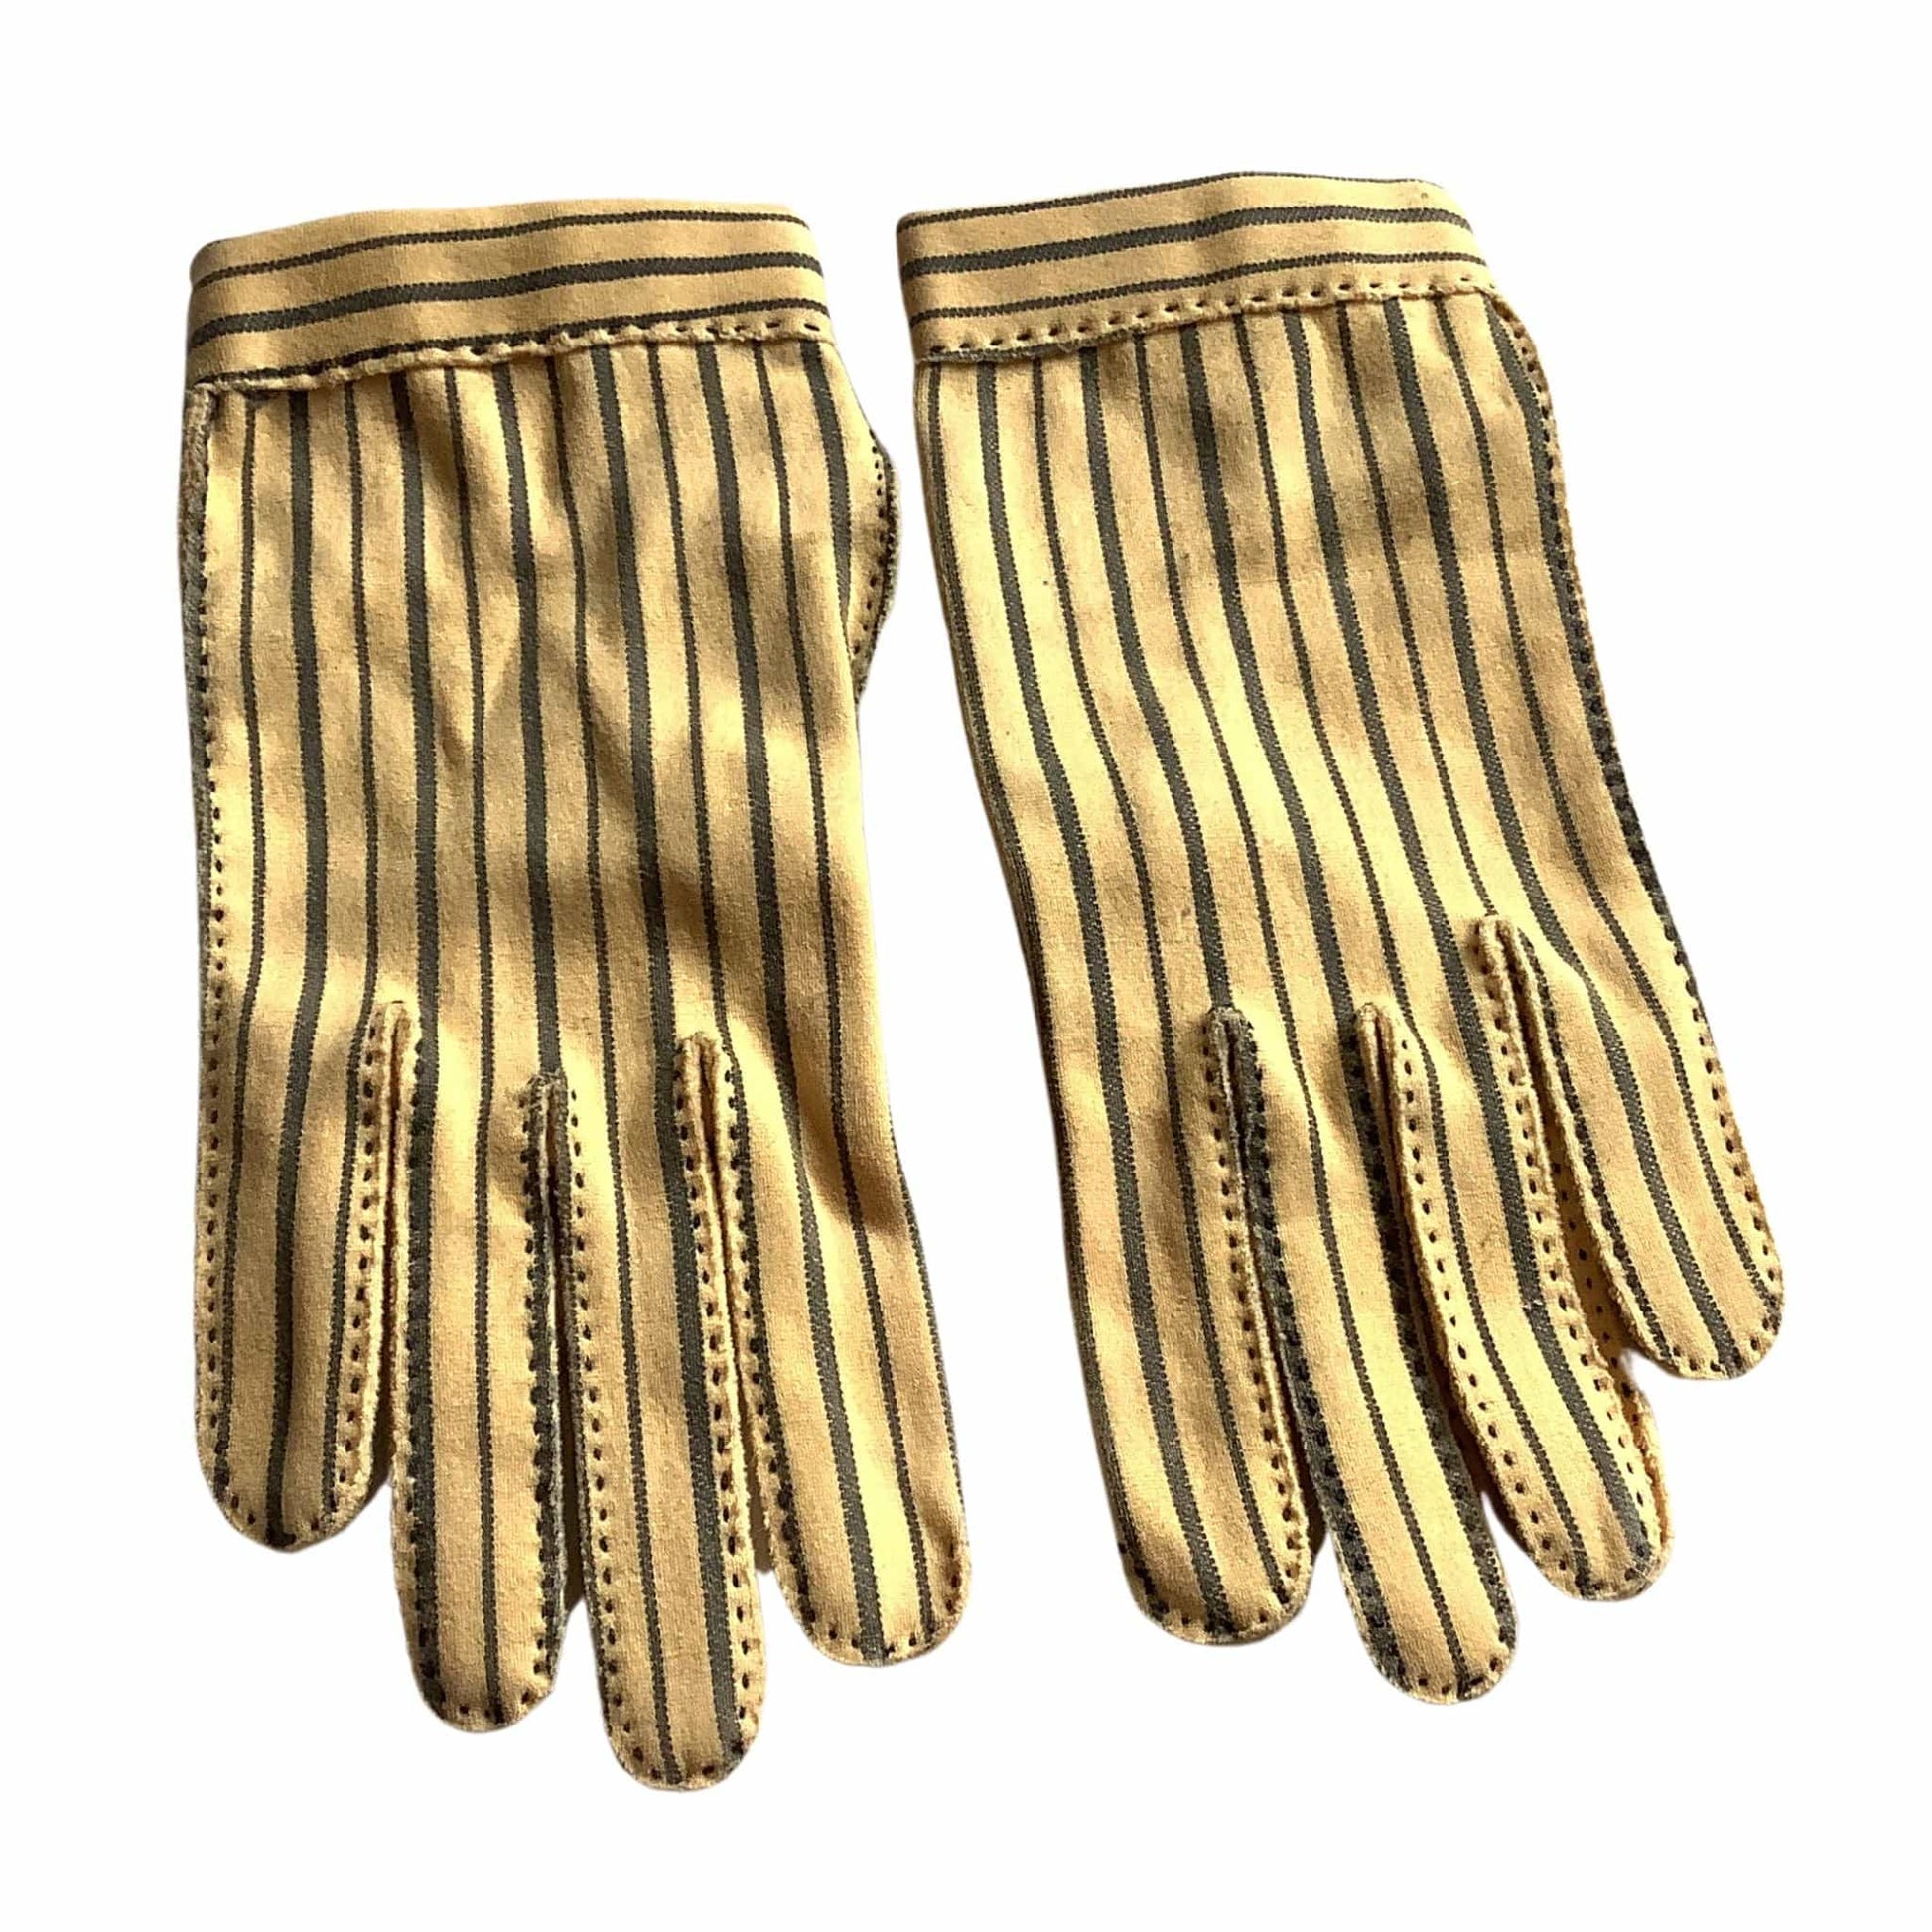 Le Gant Hermes Gloves 6 / Multi / Vintage 1960s